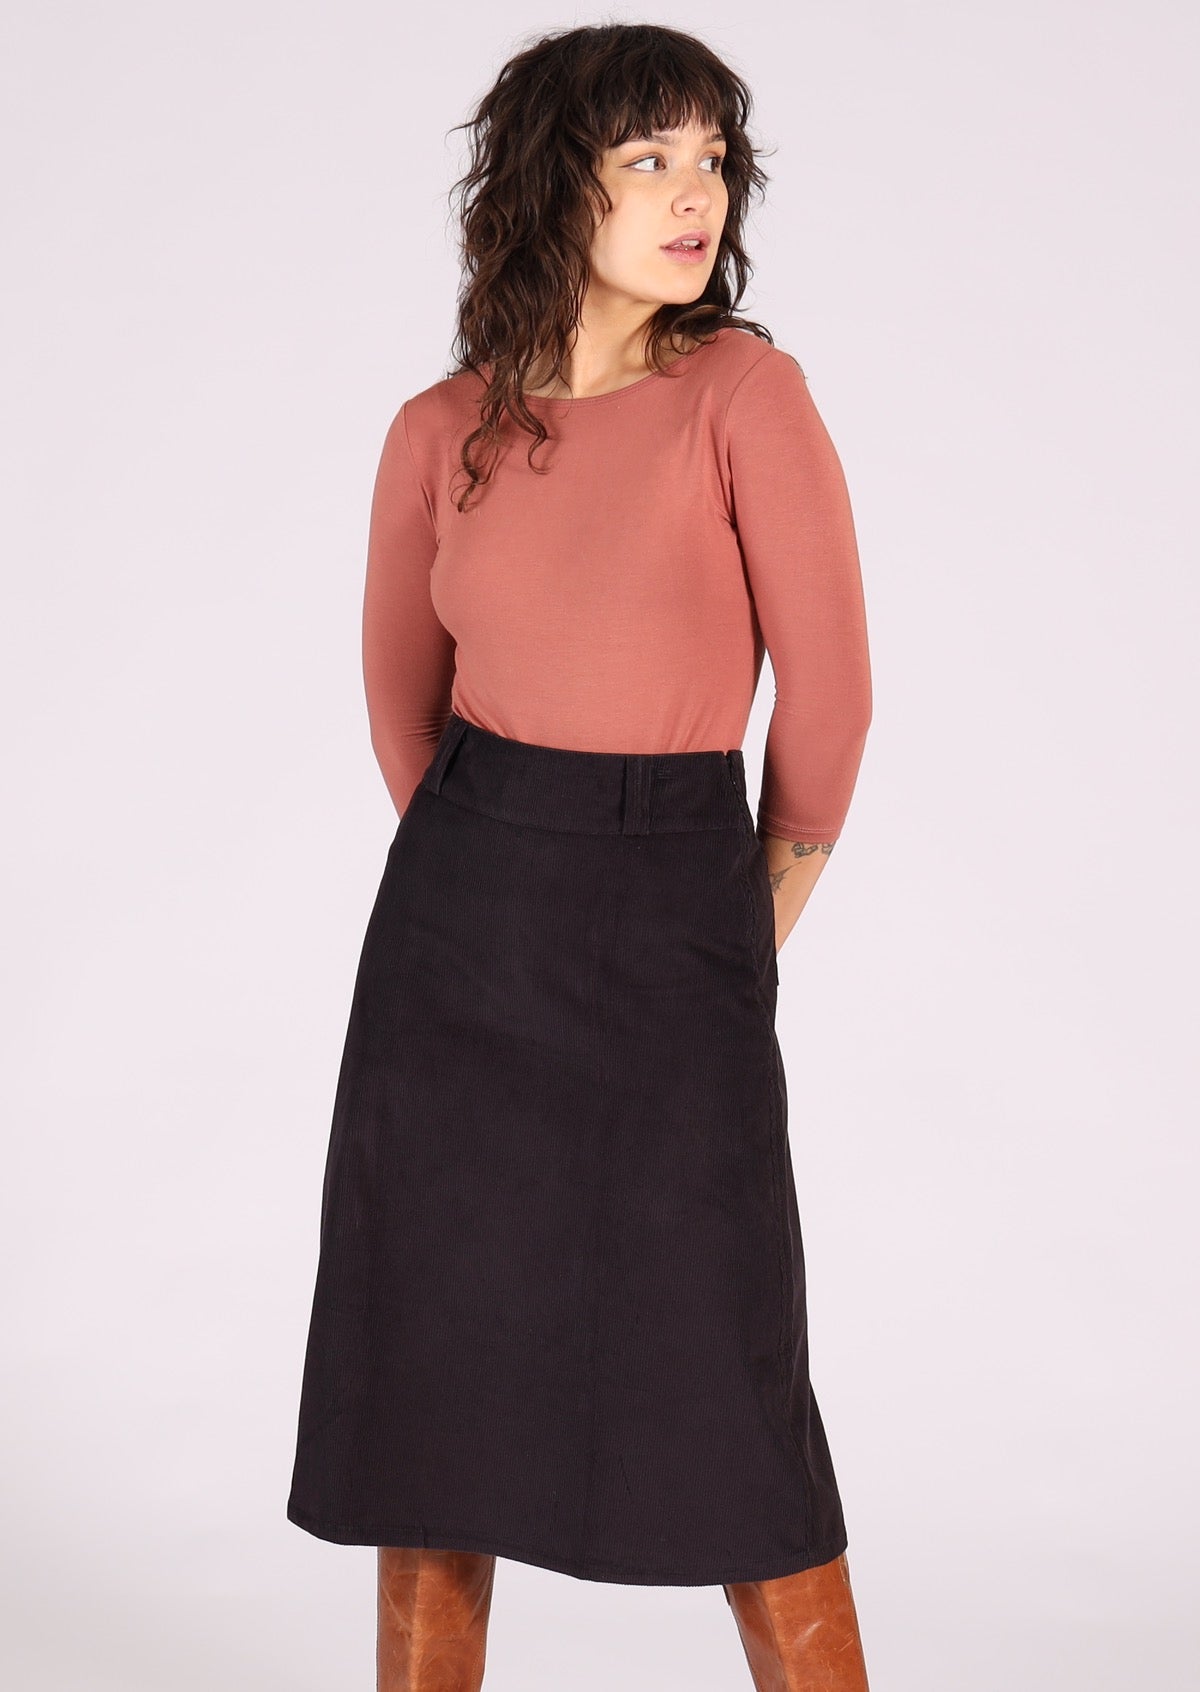 Cotton corduroy midi length dark grey skirt with belt loops